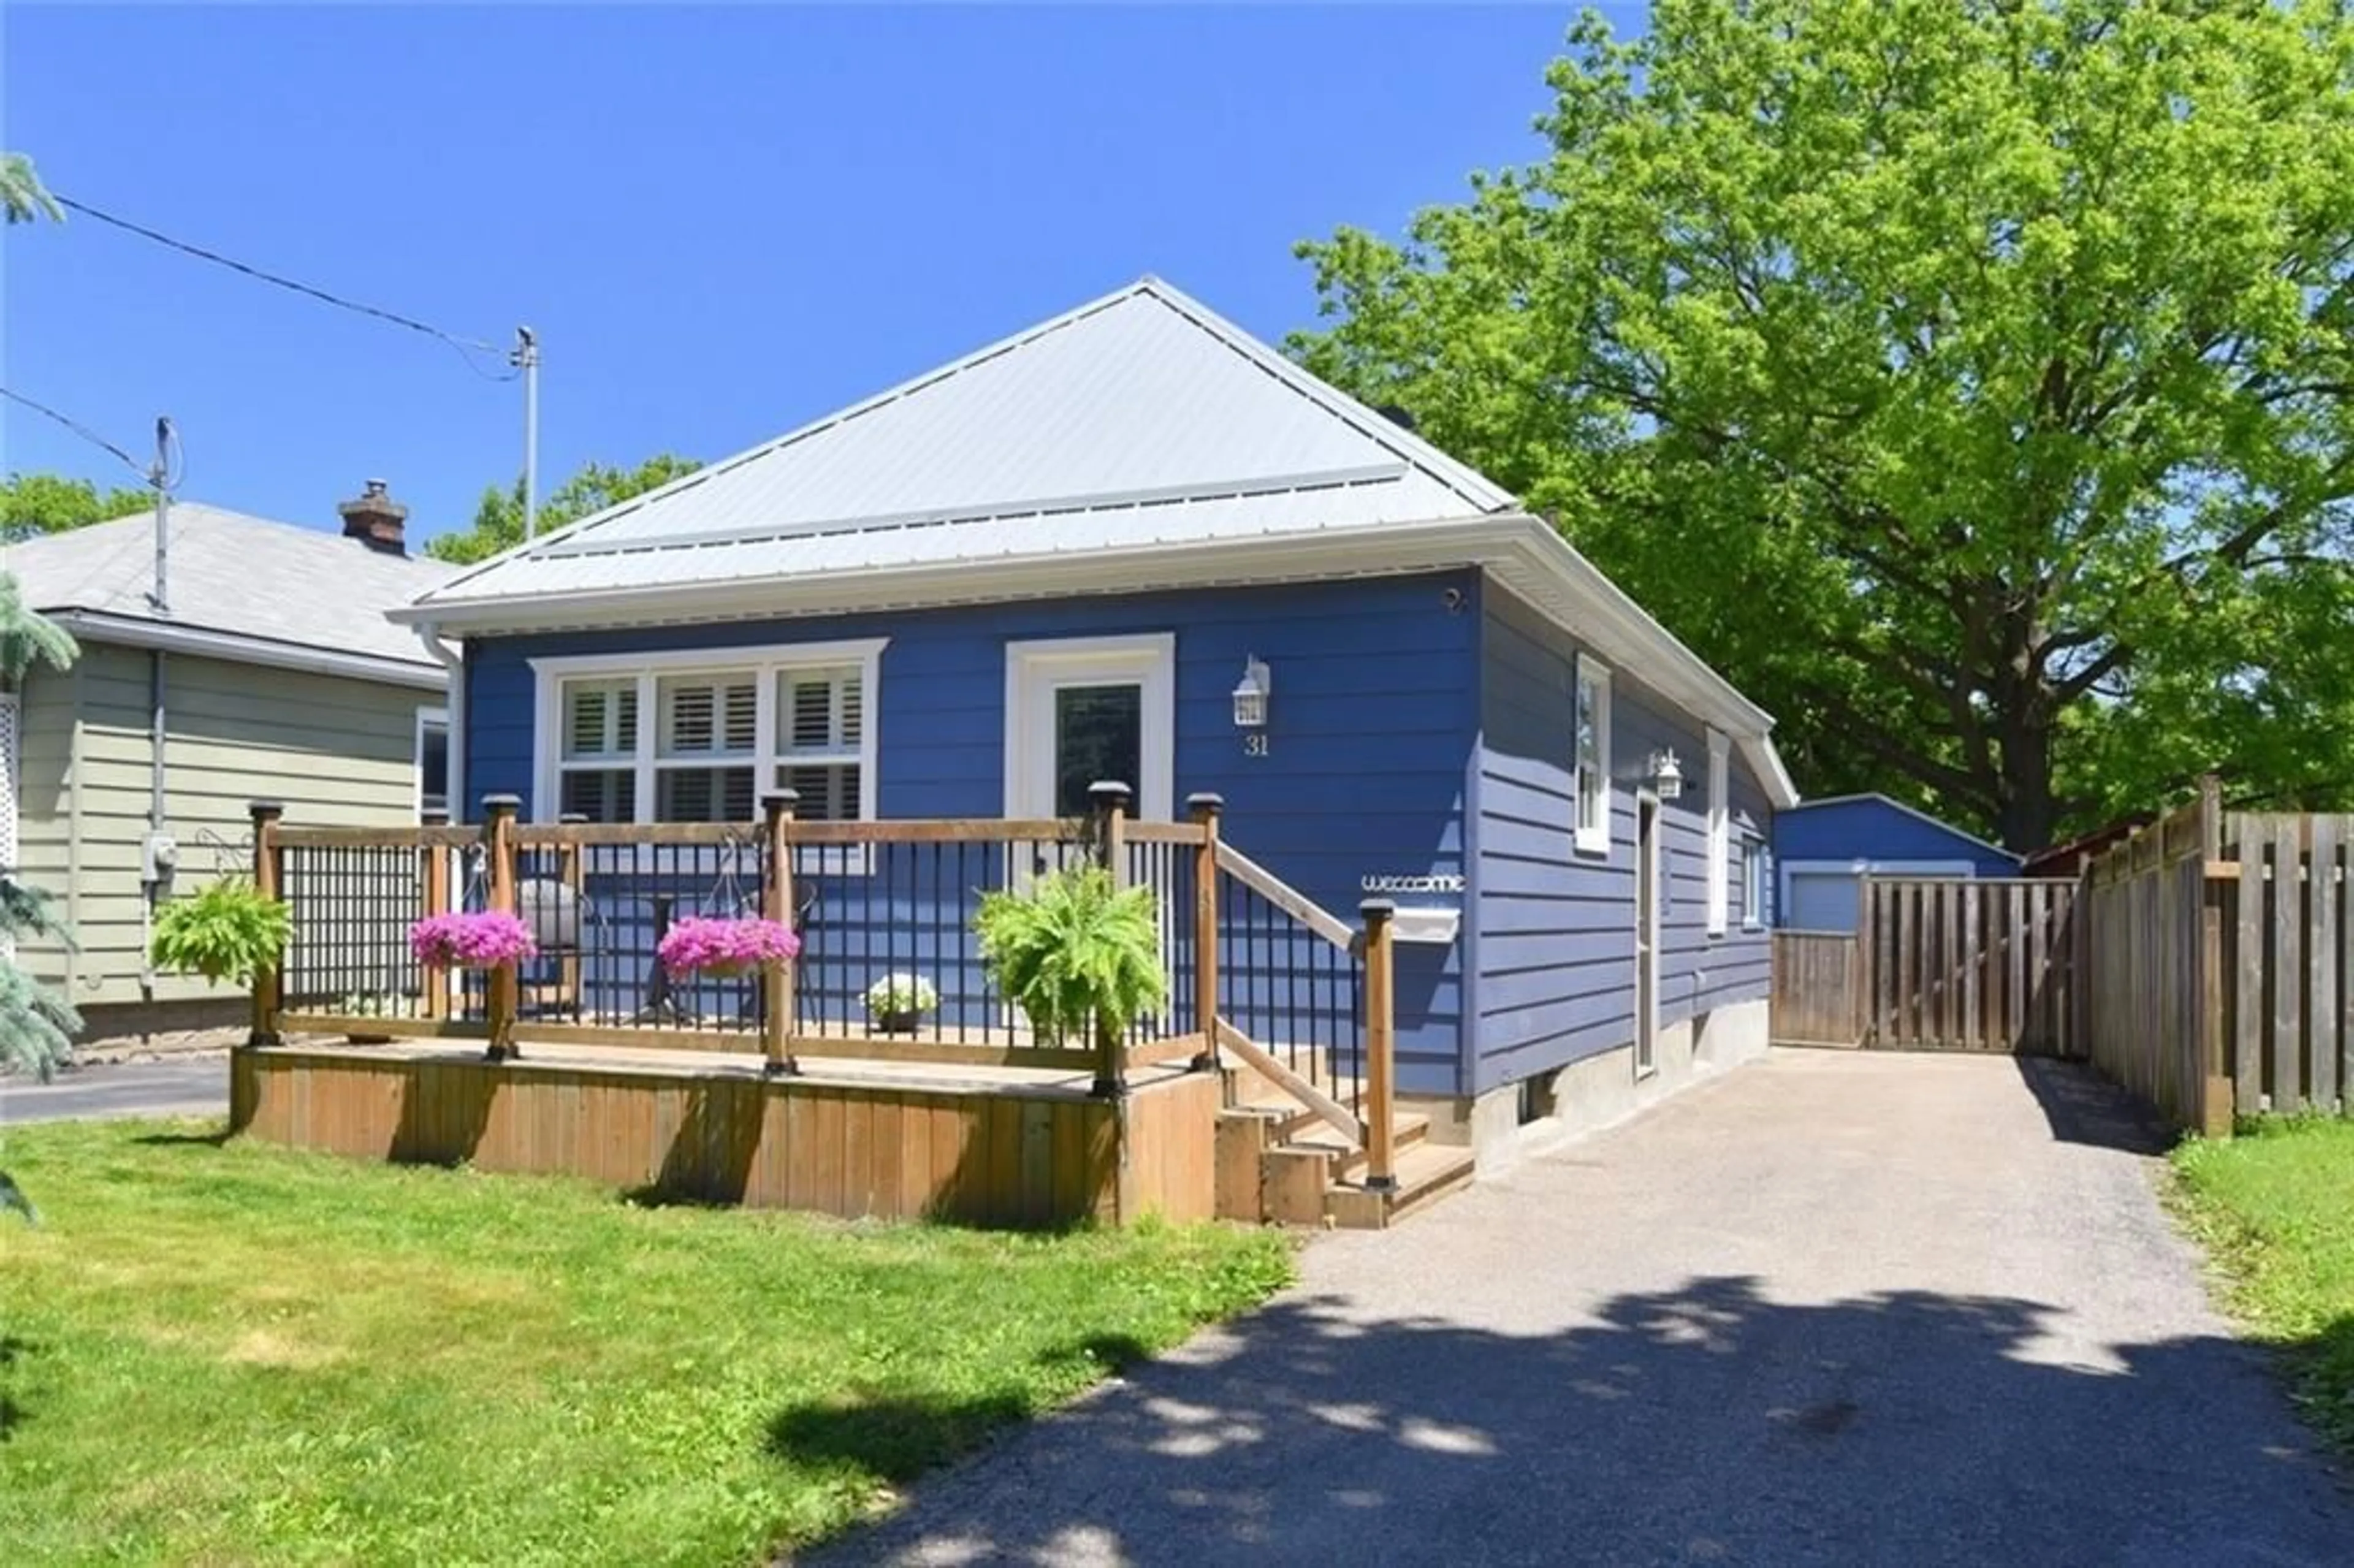 Cottage for 31 MIDDLETON St, Cambridge Ontario N1S 2R2